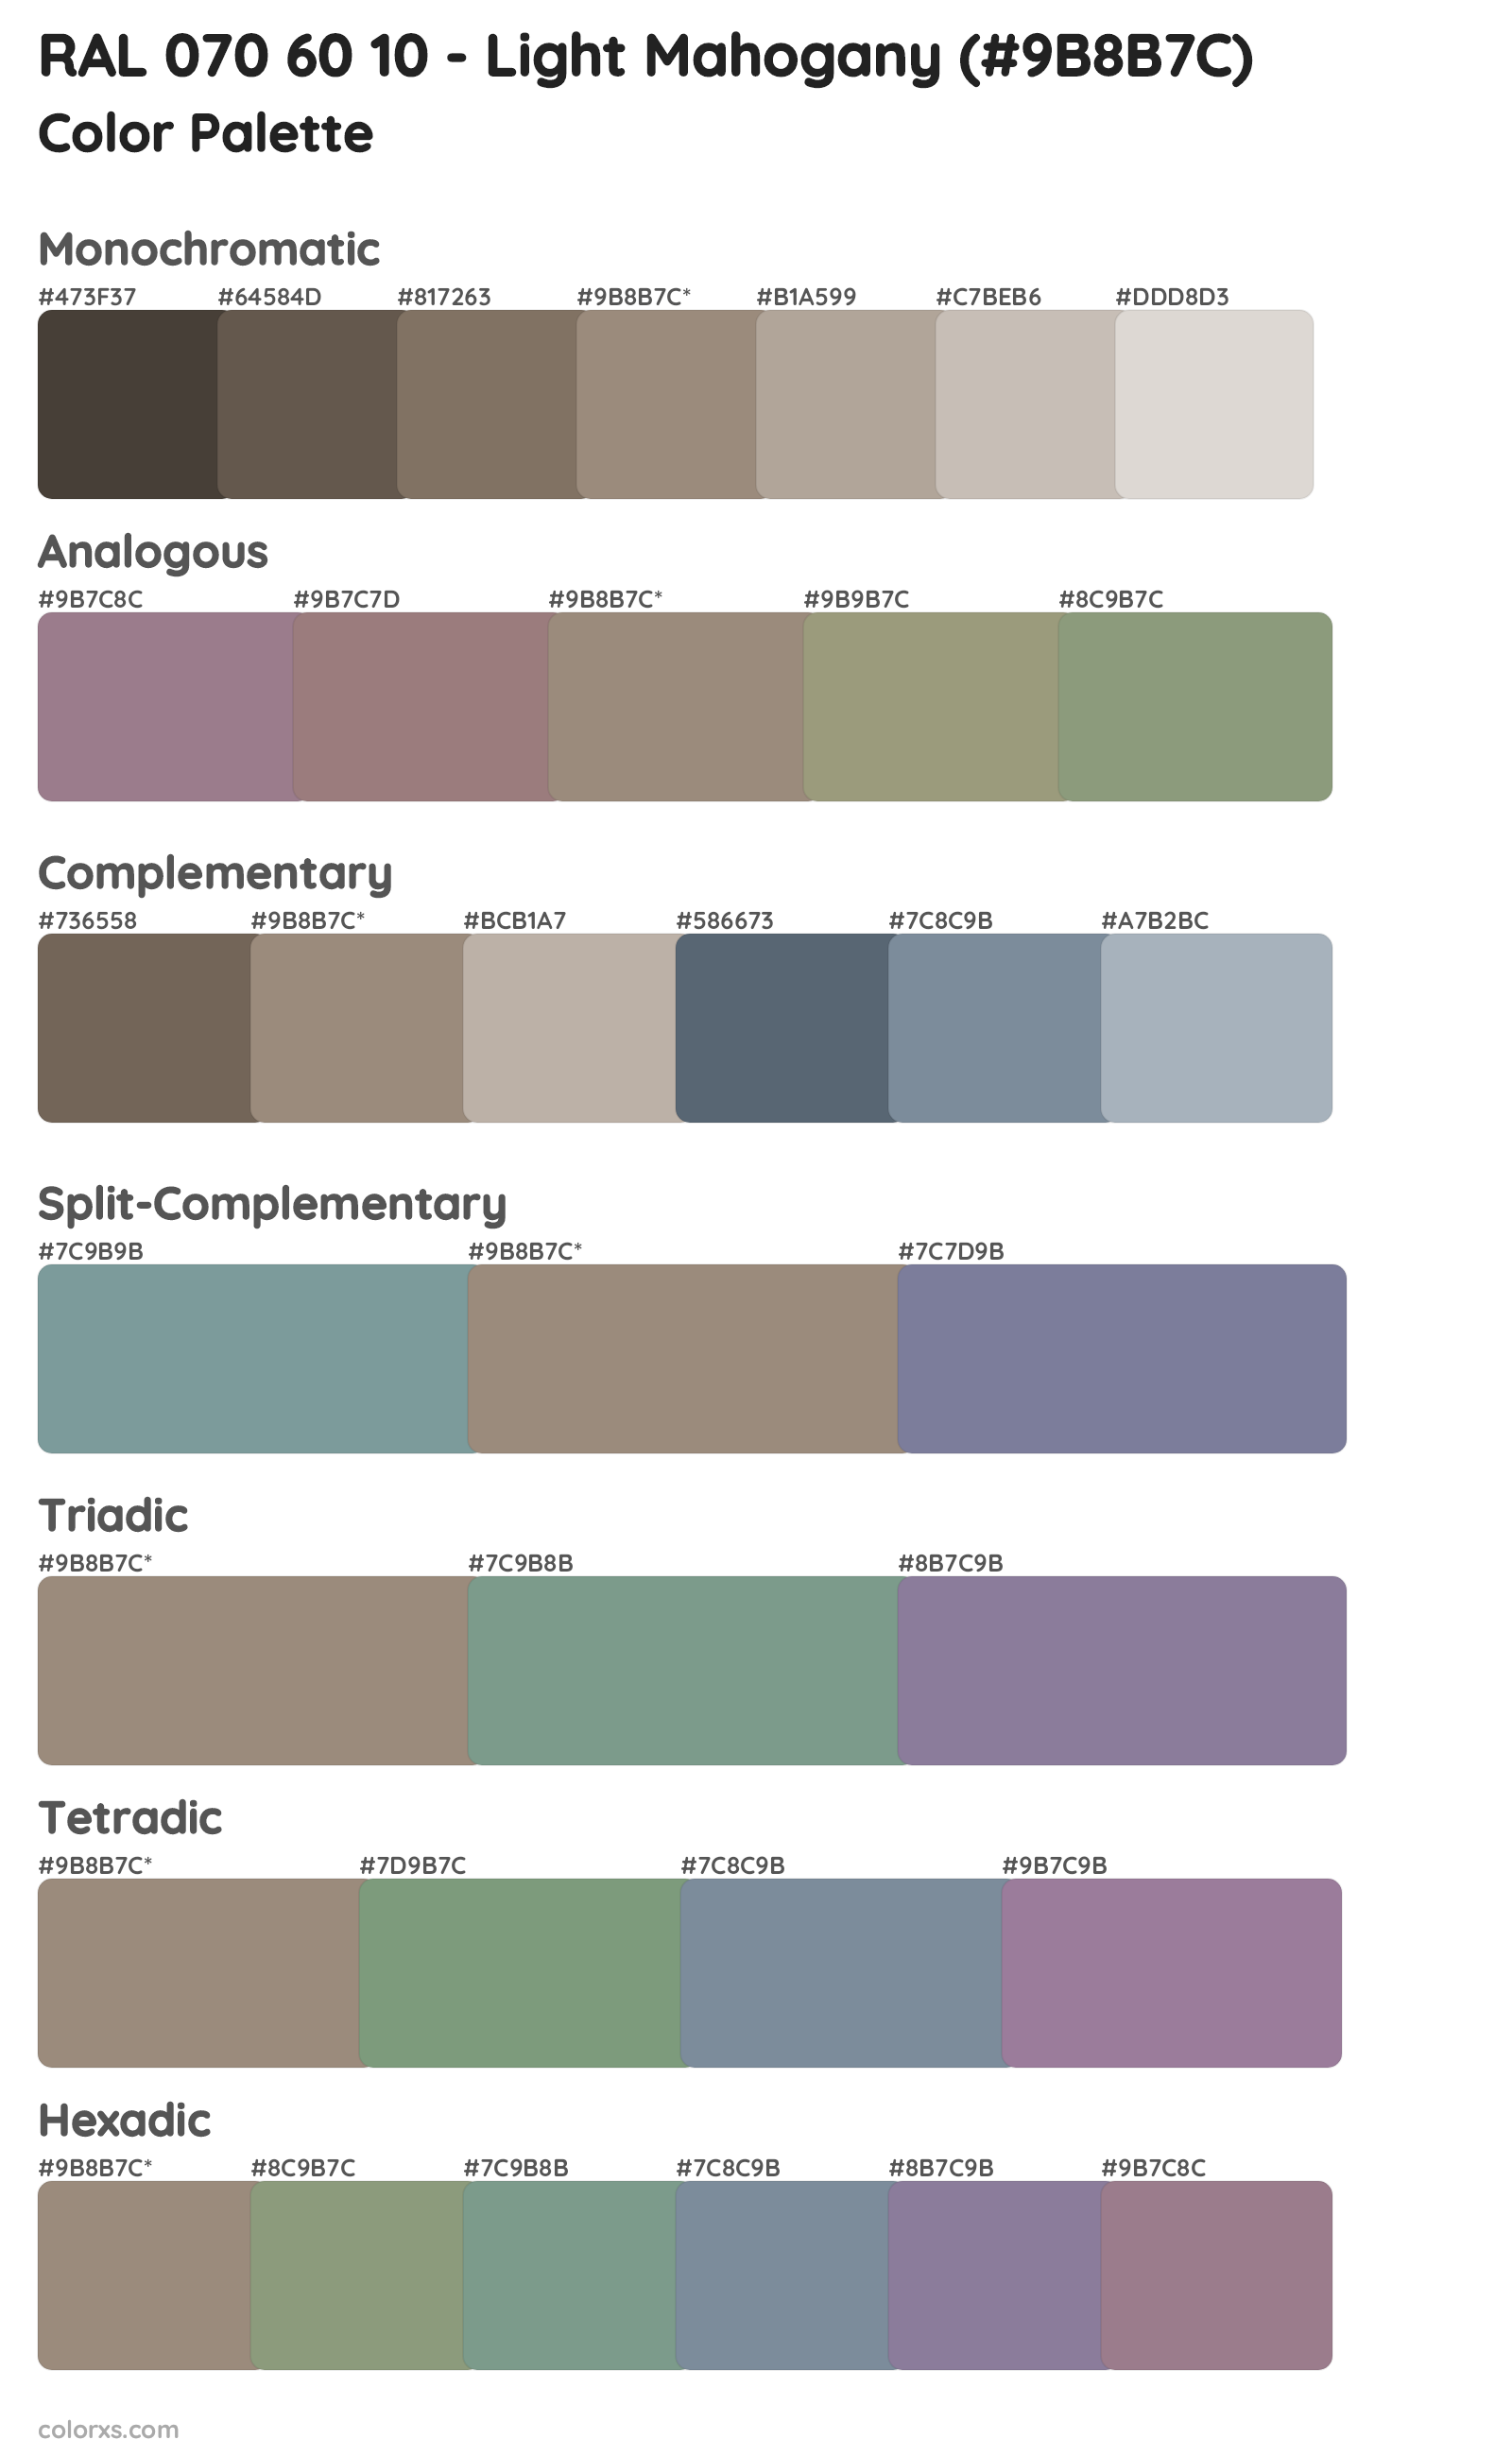 RAL 070 60 10 - Light Mahogany Color Scheme Palettes